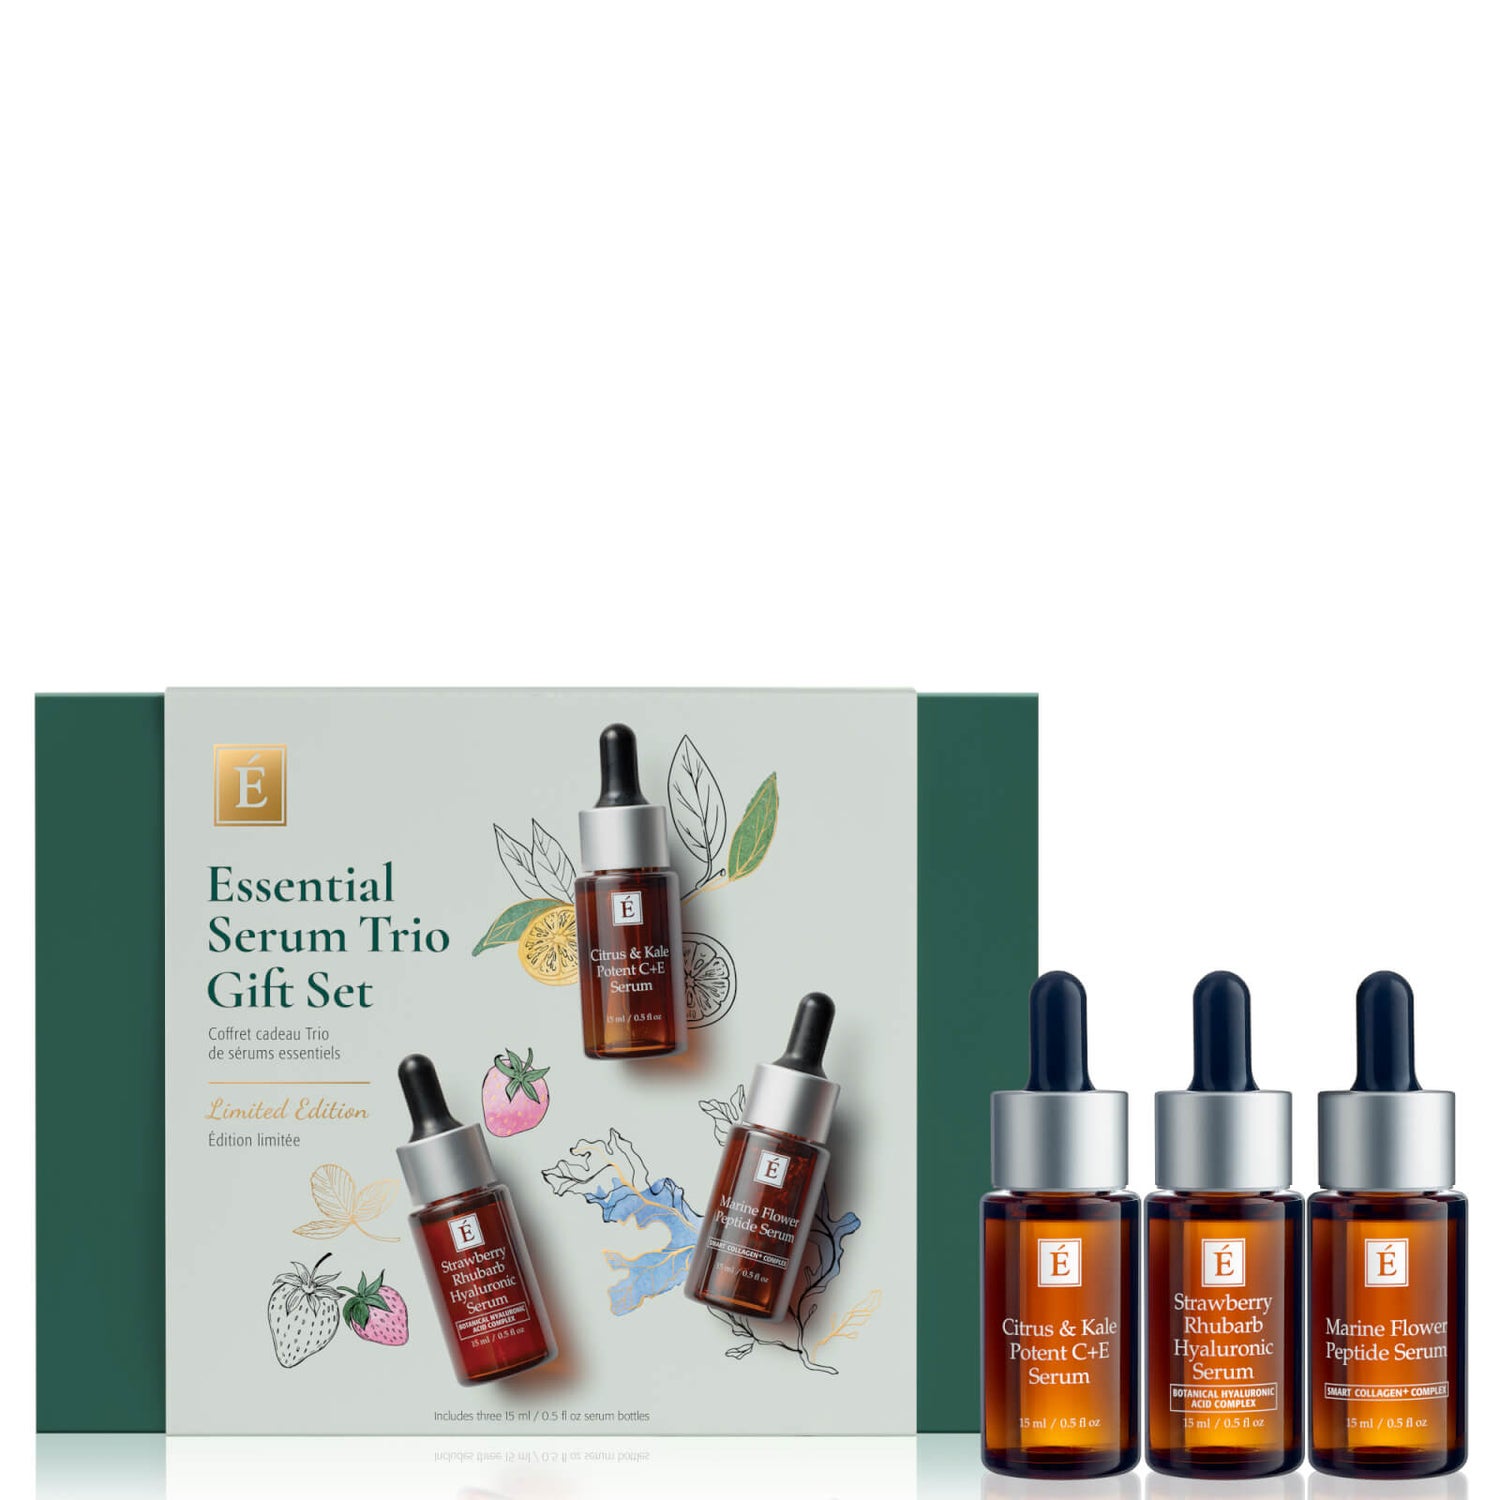 Eminence Organic Skin Care Essential Serum Trio Limited Edition Gift Set